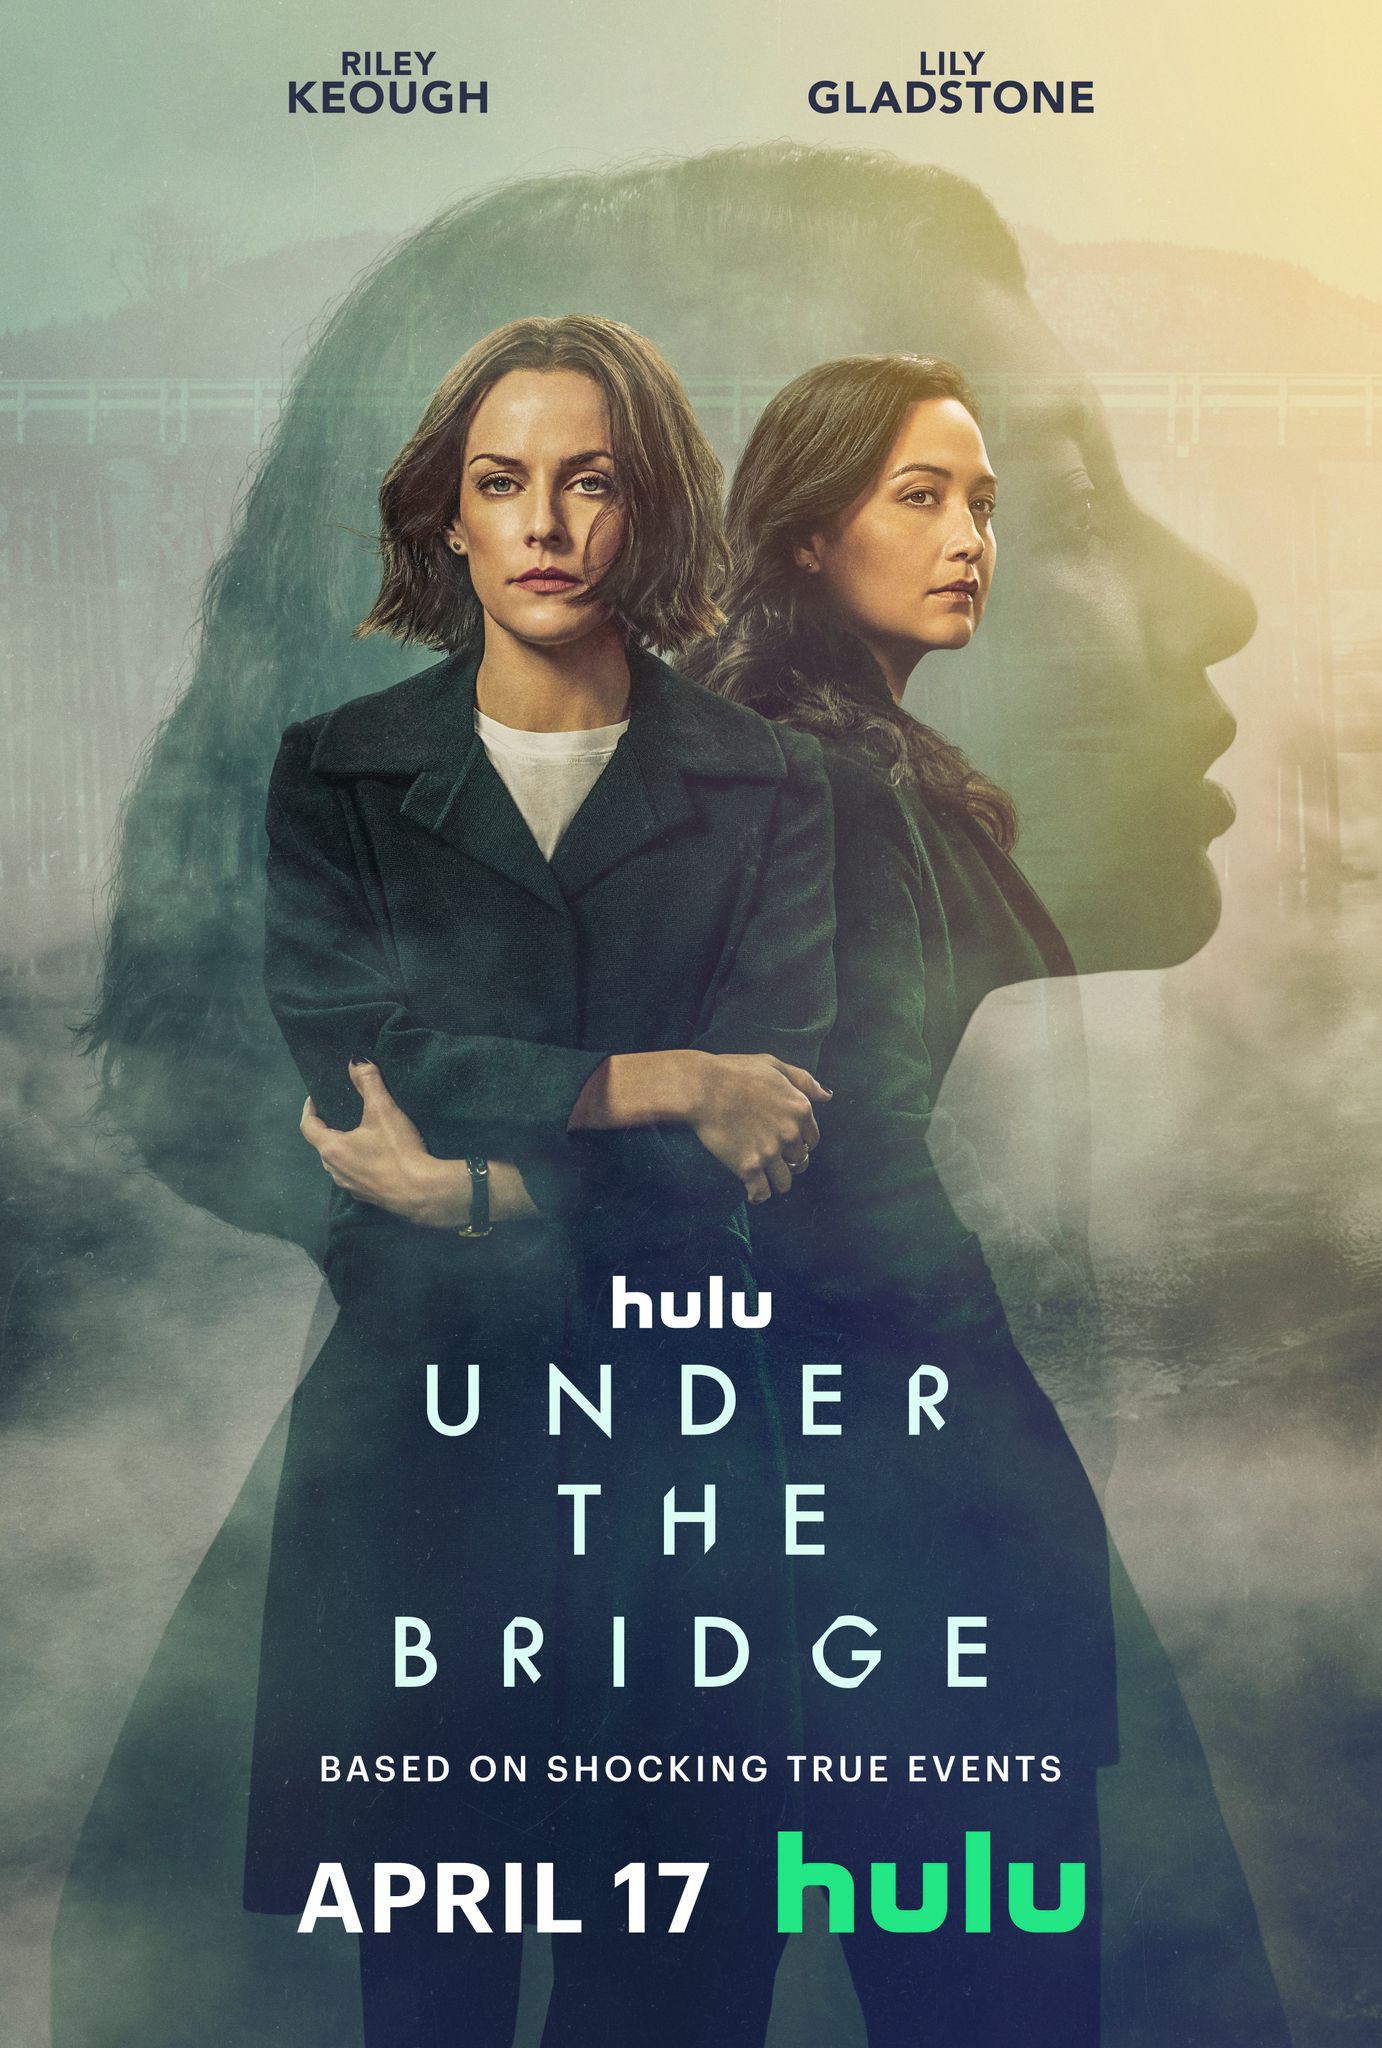 Under The Bridge Episode 6 Clip See Riley Keough & Lily Gladstone's